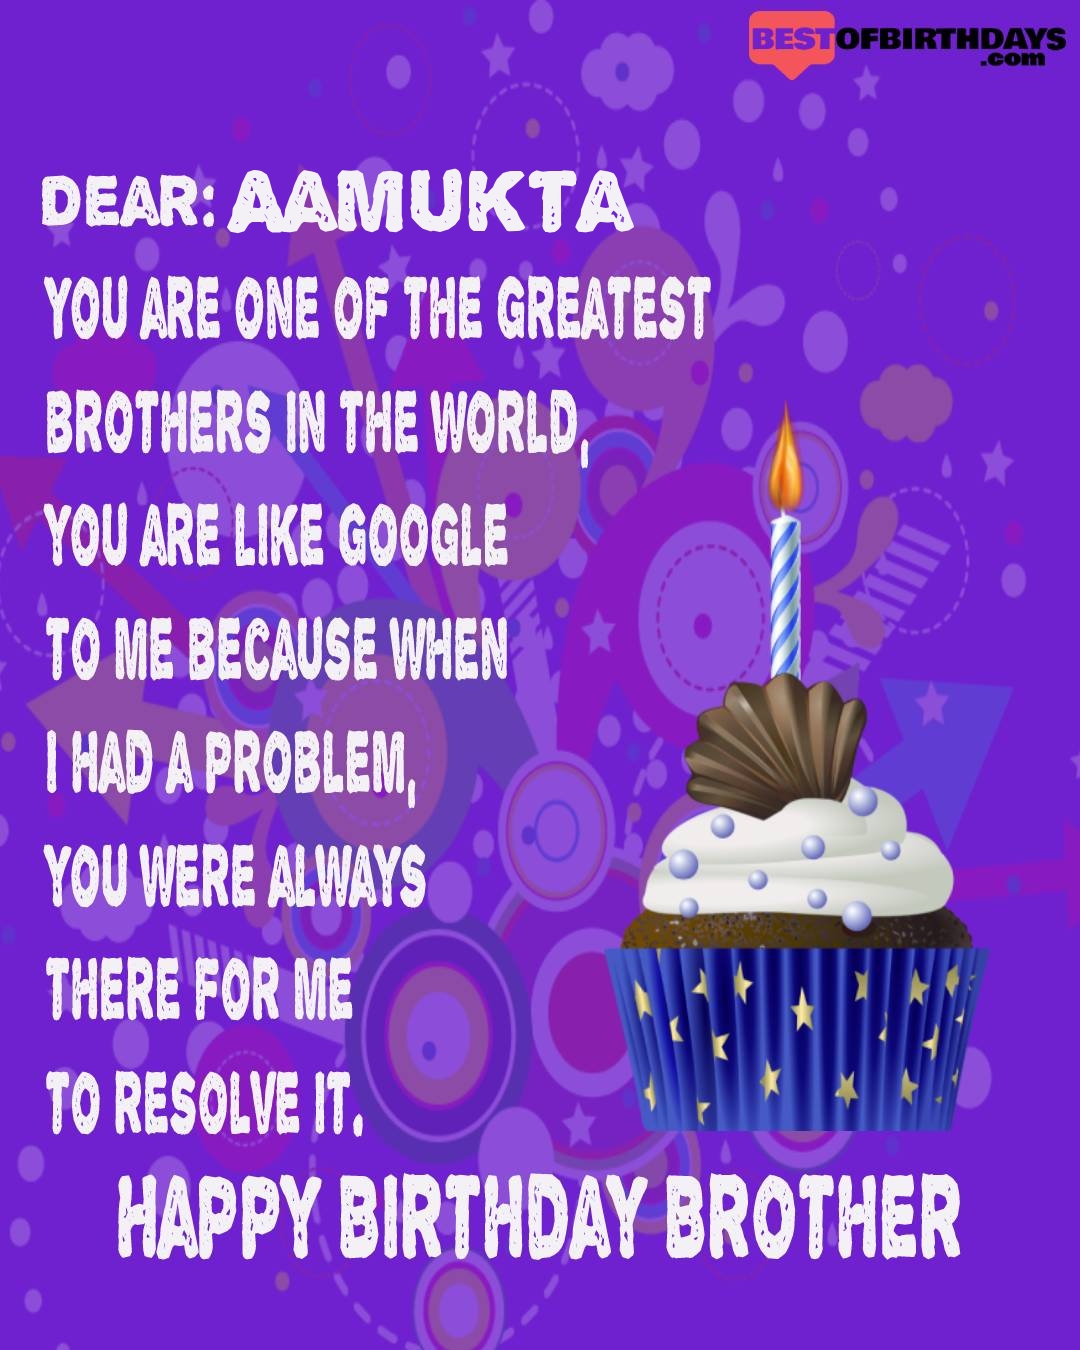 Happy birthday aamukta bhai brother bro